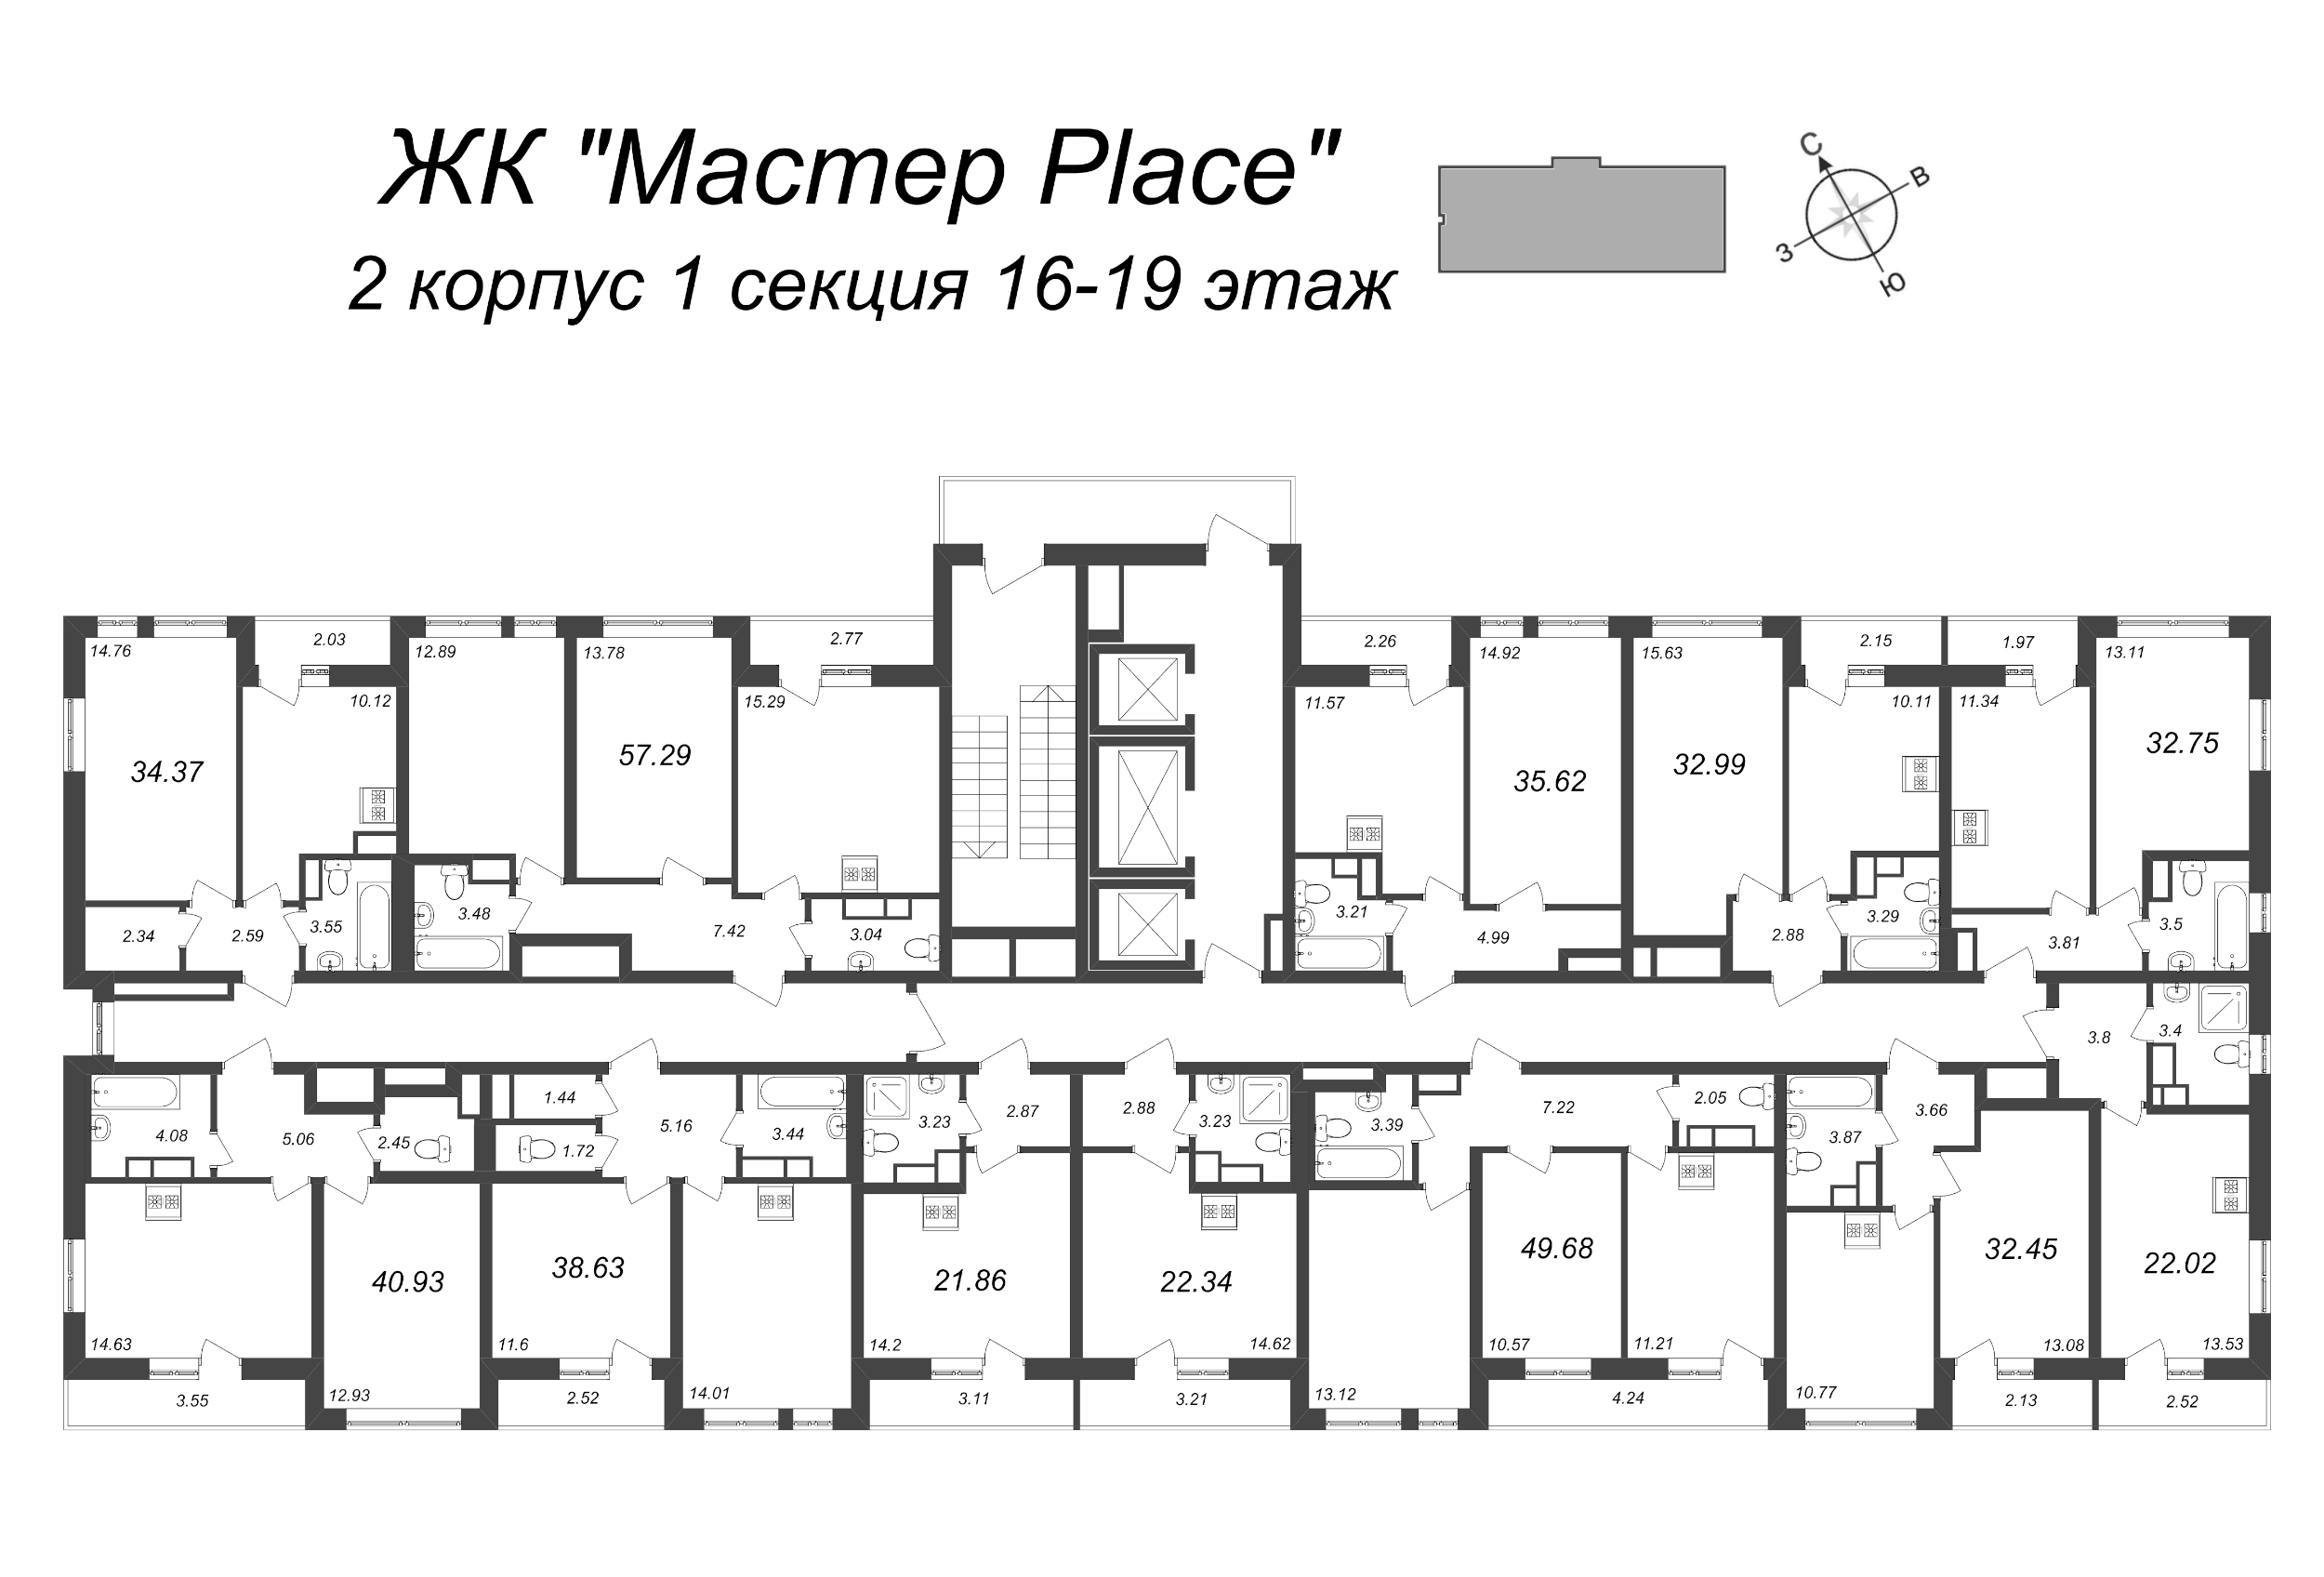 3-комнатная (Евро) квартира, 57.29 м² - планировка этажа